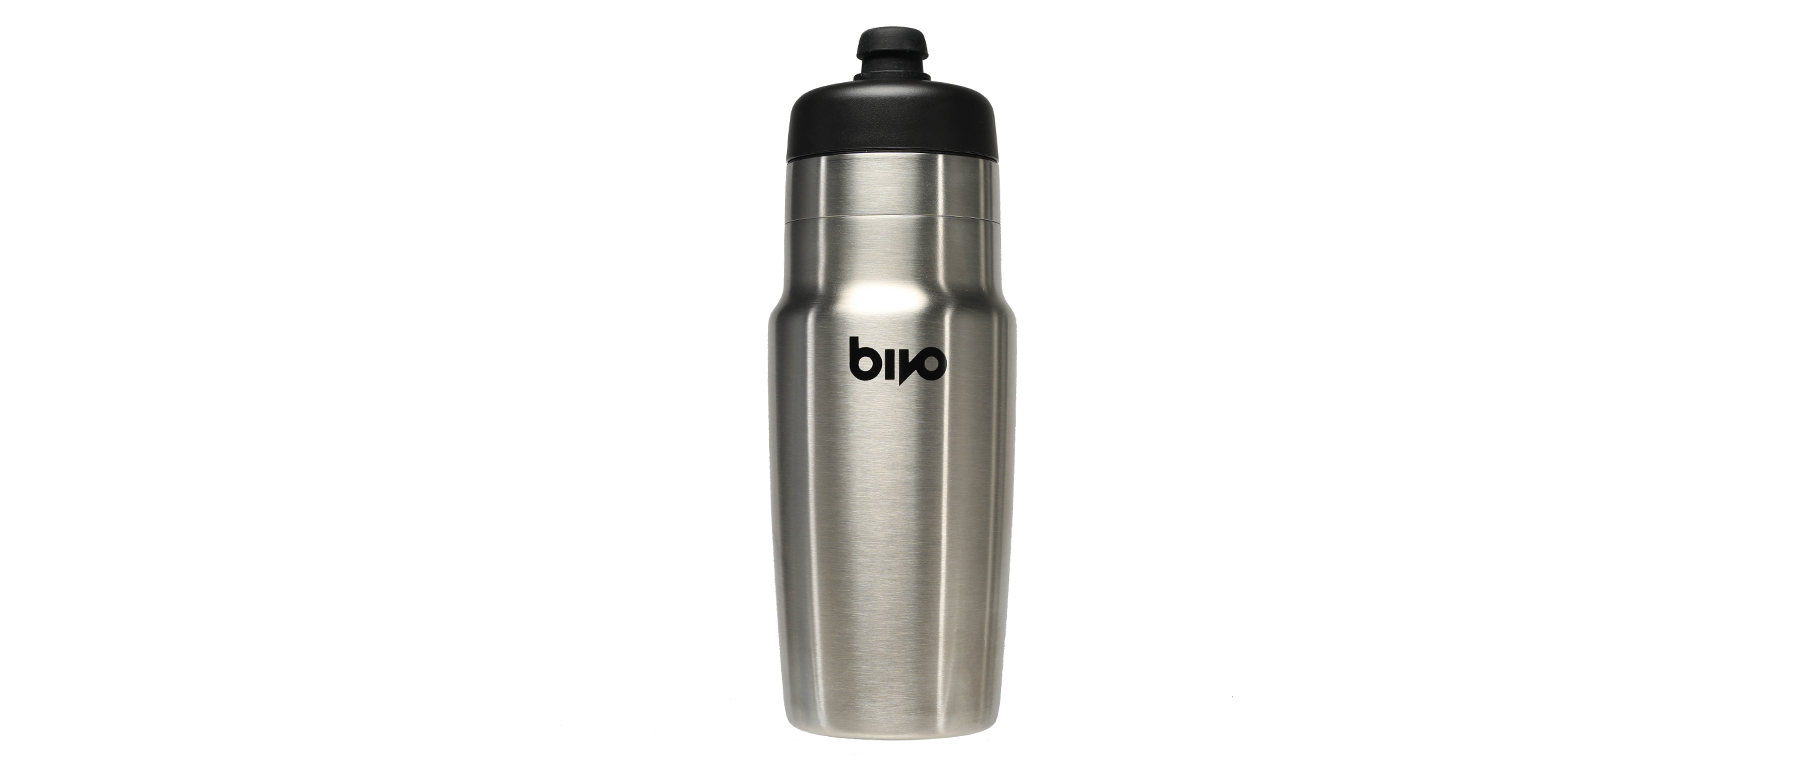 Bivo One Water Bottle 21oz